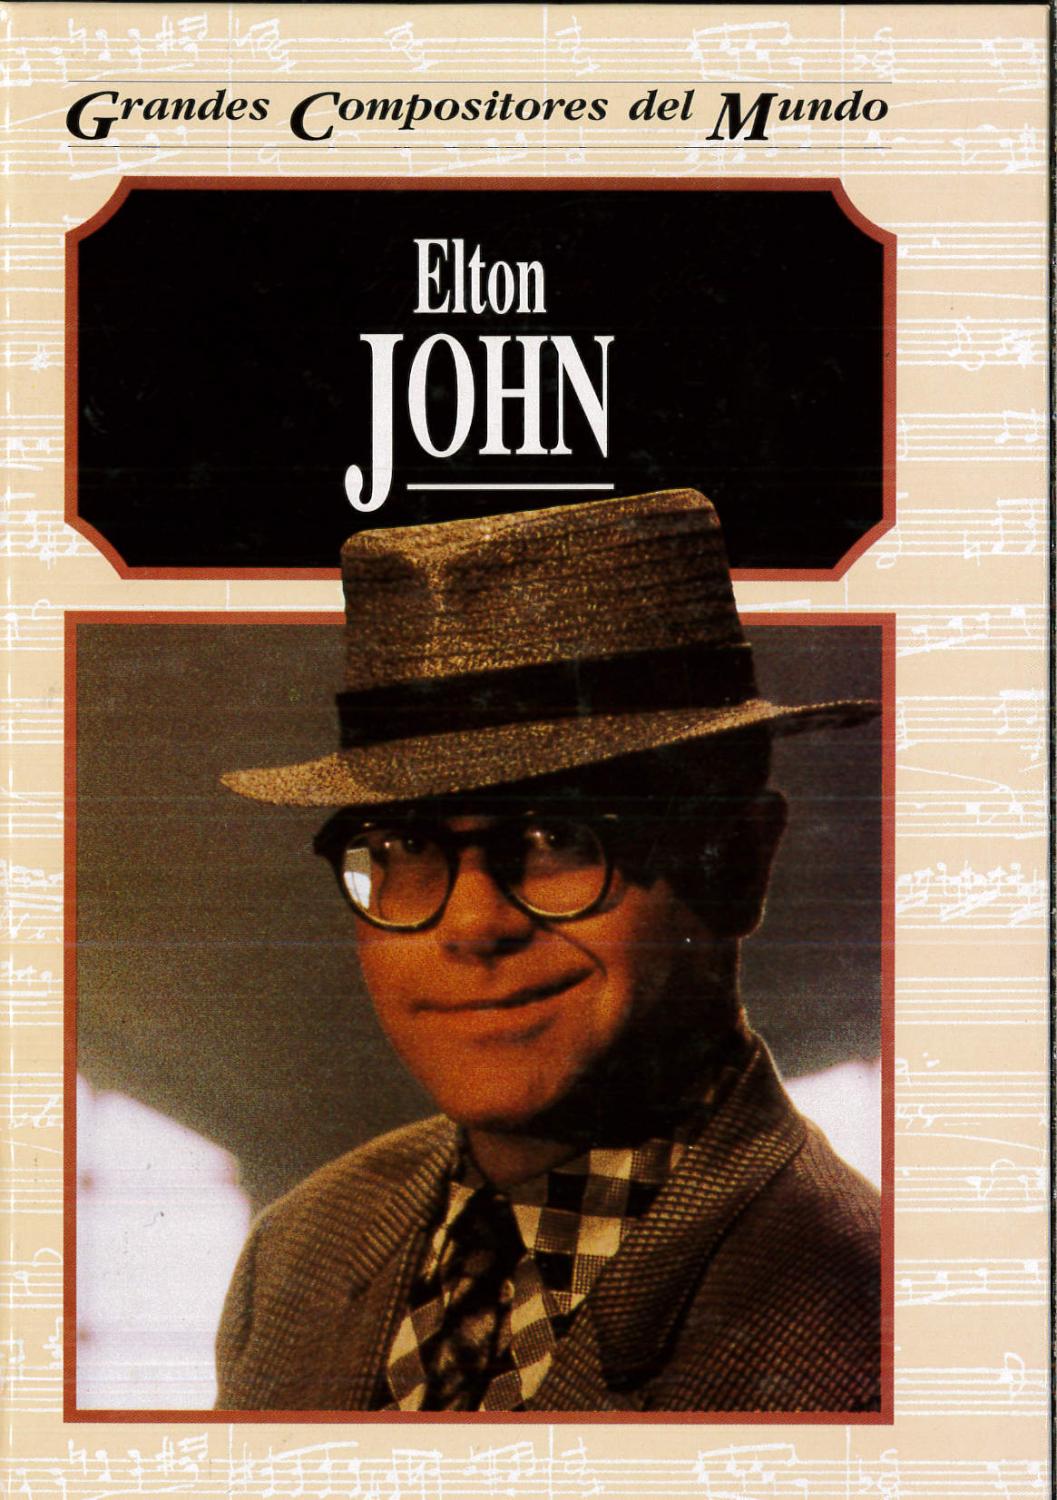 Elton john -Grandes Compositores Del Mundo (Grandes Compositores Del Mundo / Great Musicians of the World Series) - John O'Mahonu